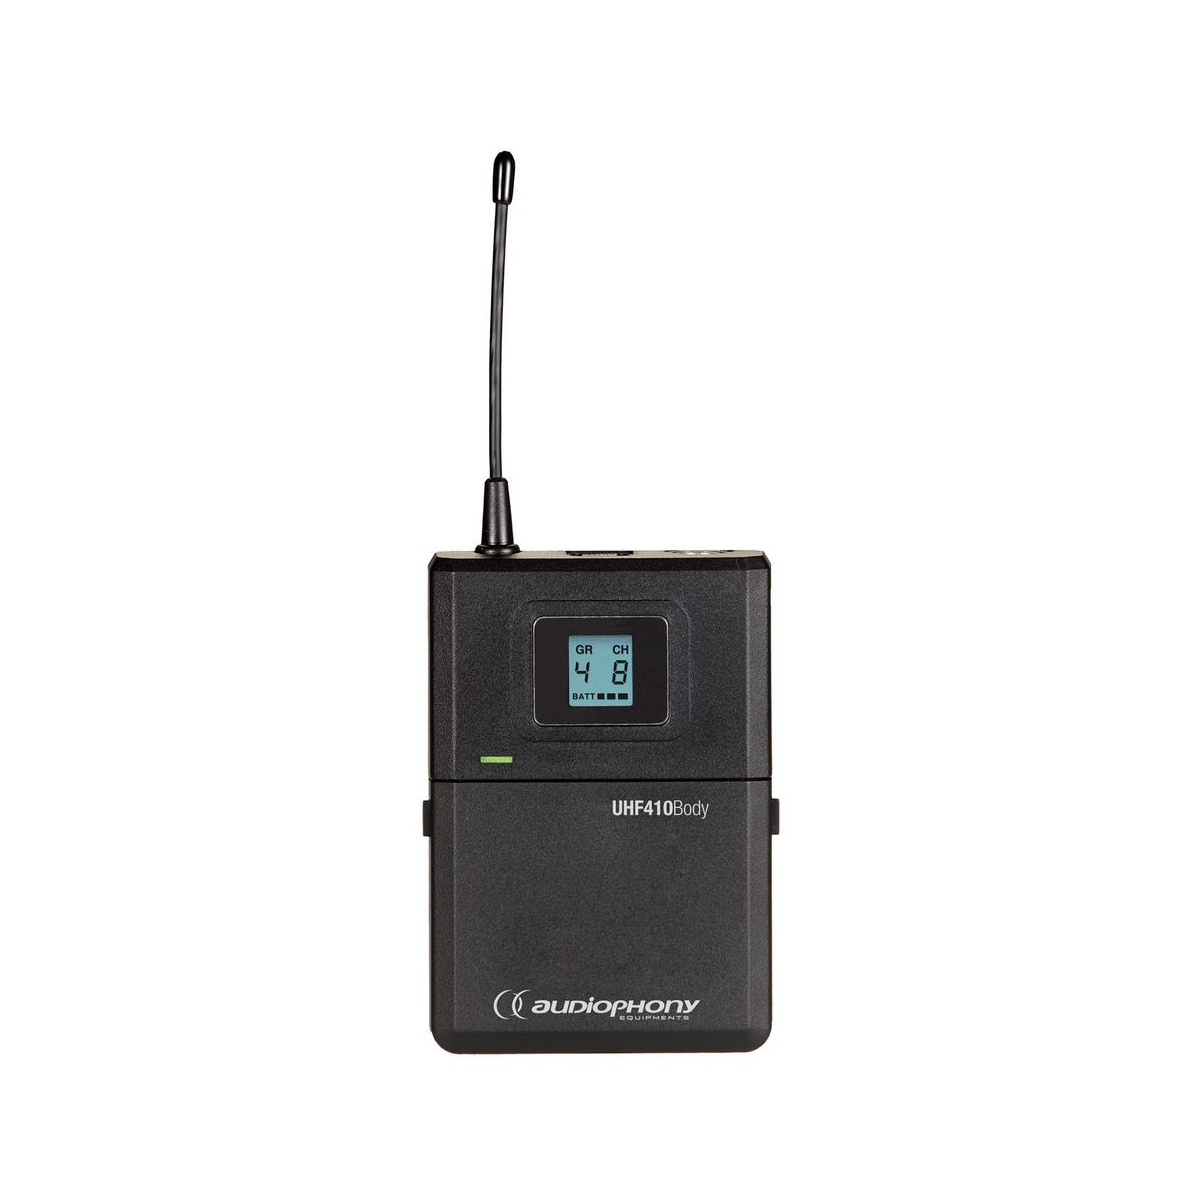 Micros serre-tête sans fil - Audiophony - UHF410 BODY F5